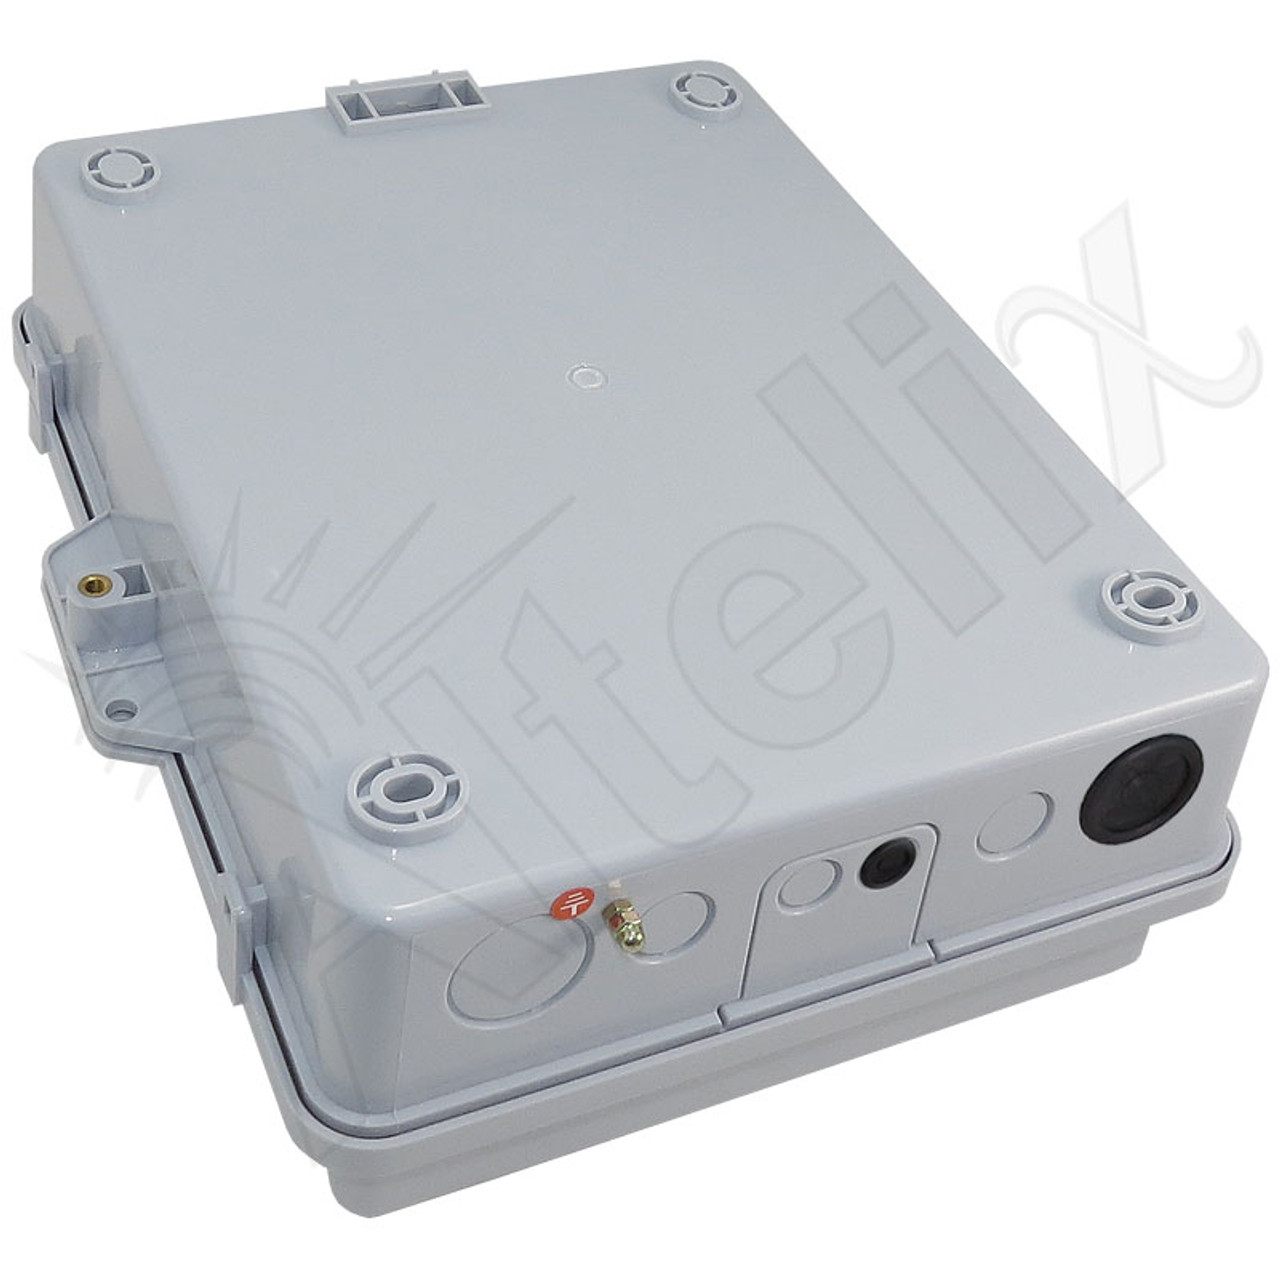 Altelix 10x9x4 PC+ABS Weatherproof Vented Utility Box NEMA Enclosure with  Hinged Door